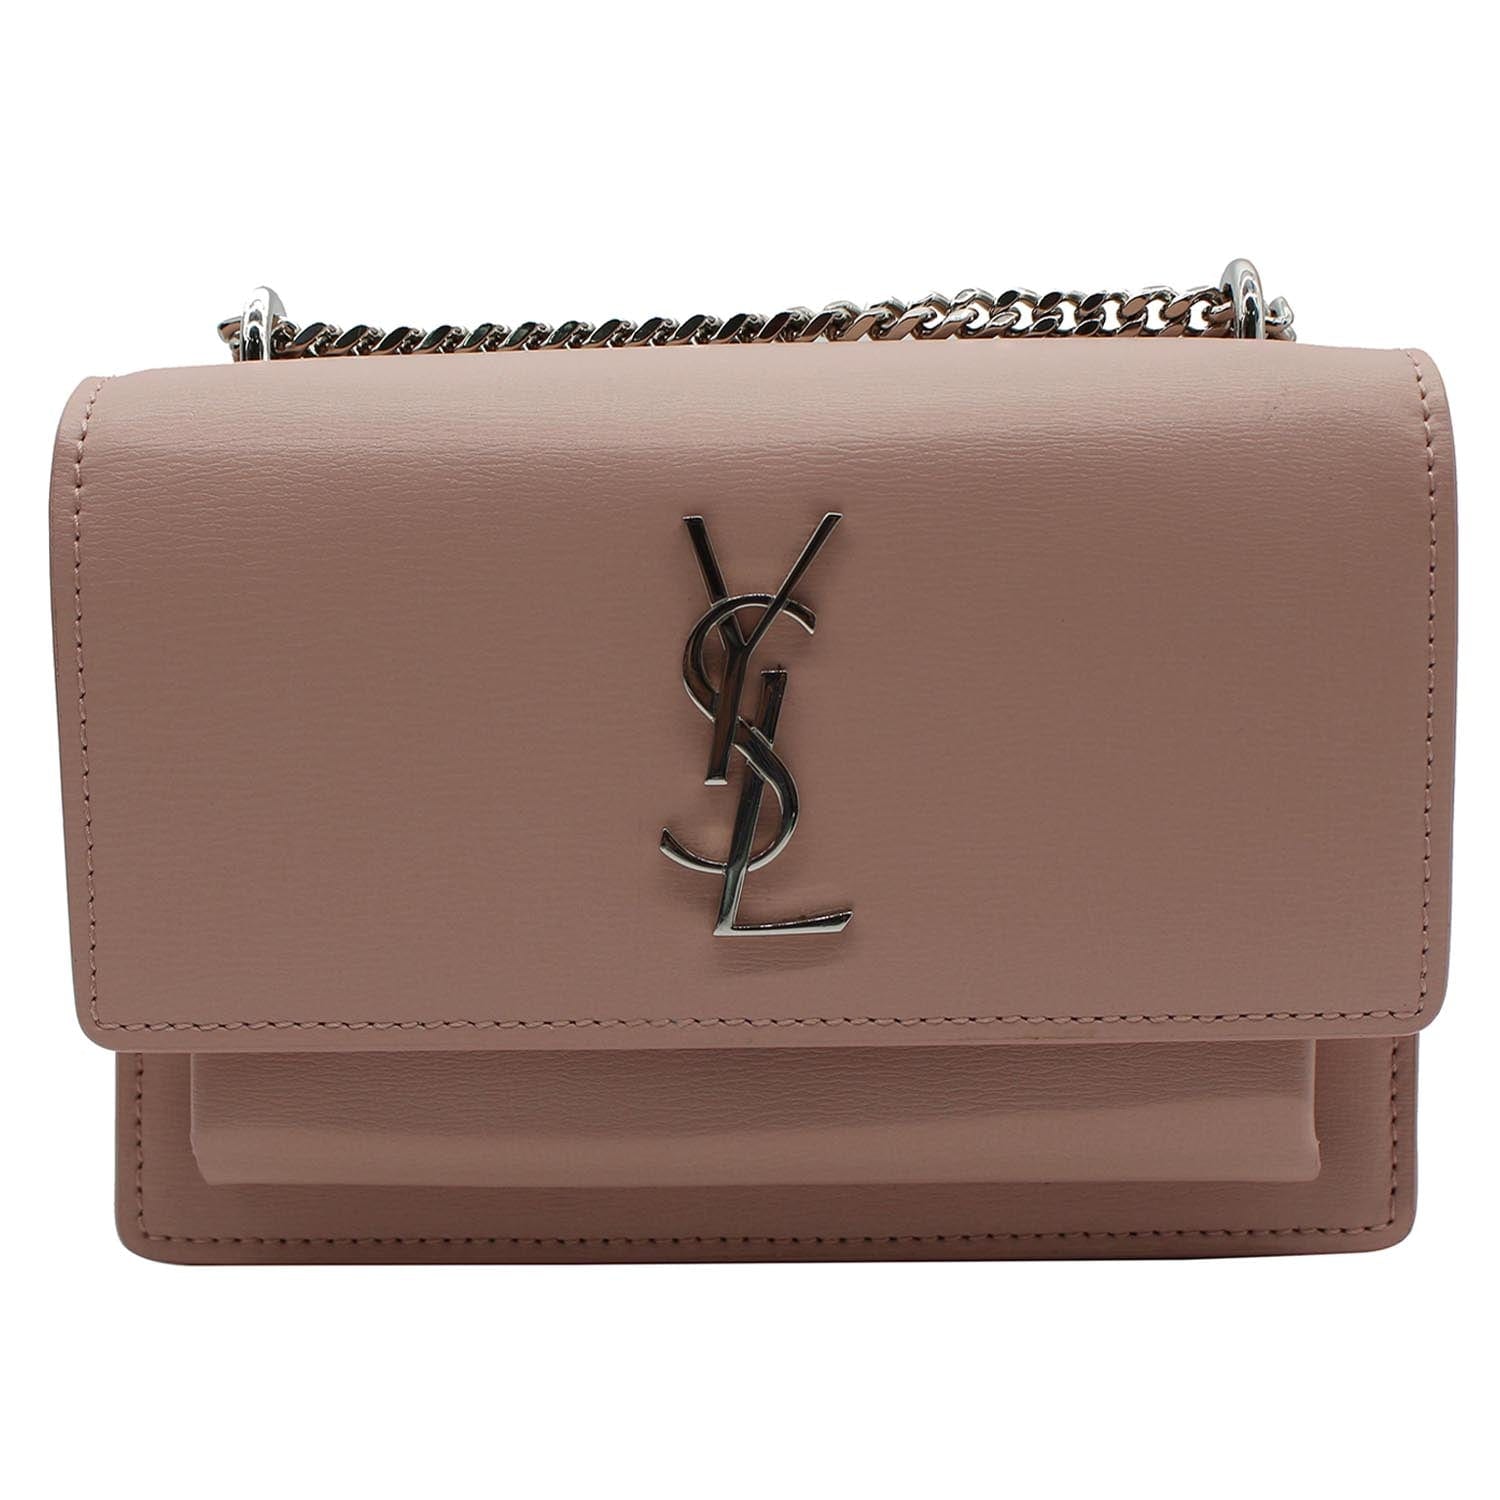 Sunset leather handbag Saint Laurent Pink in Leather - 34027992